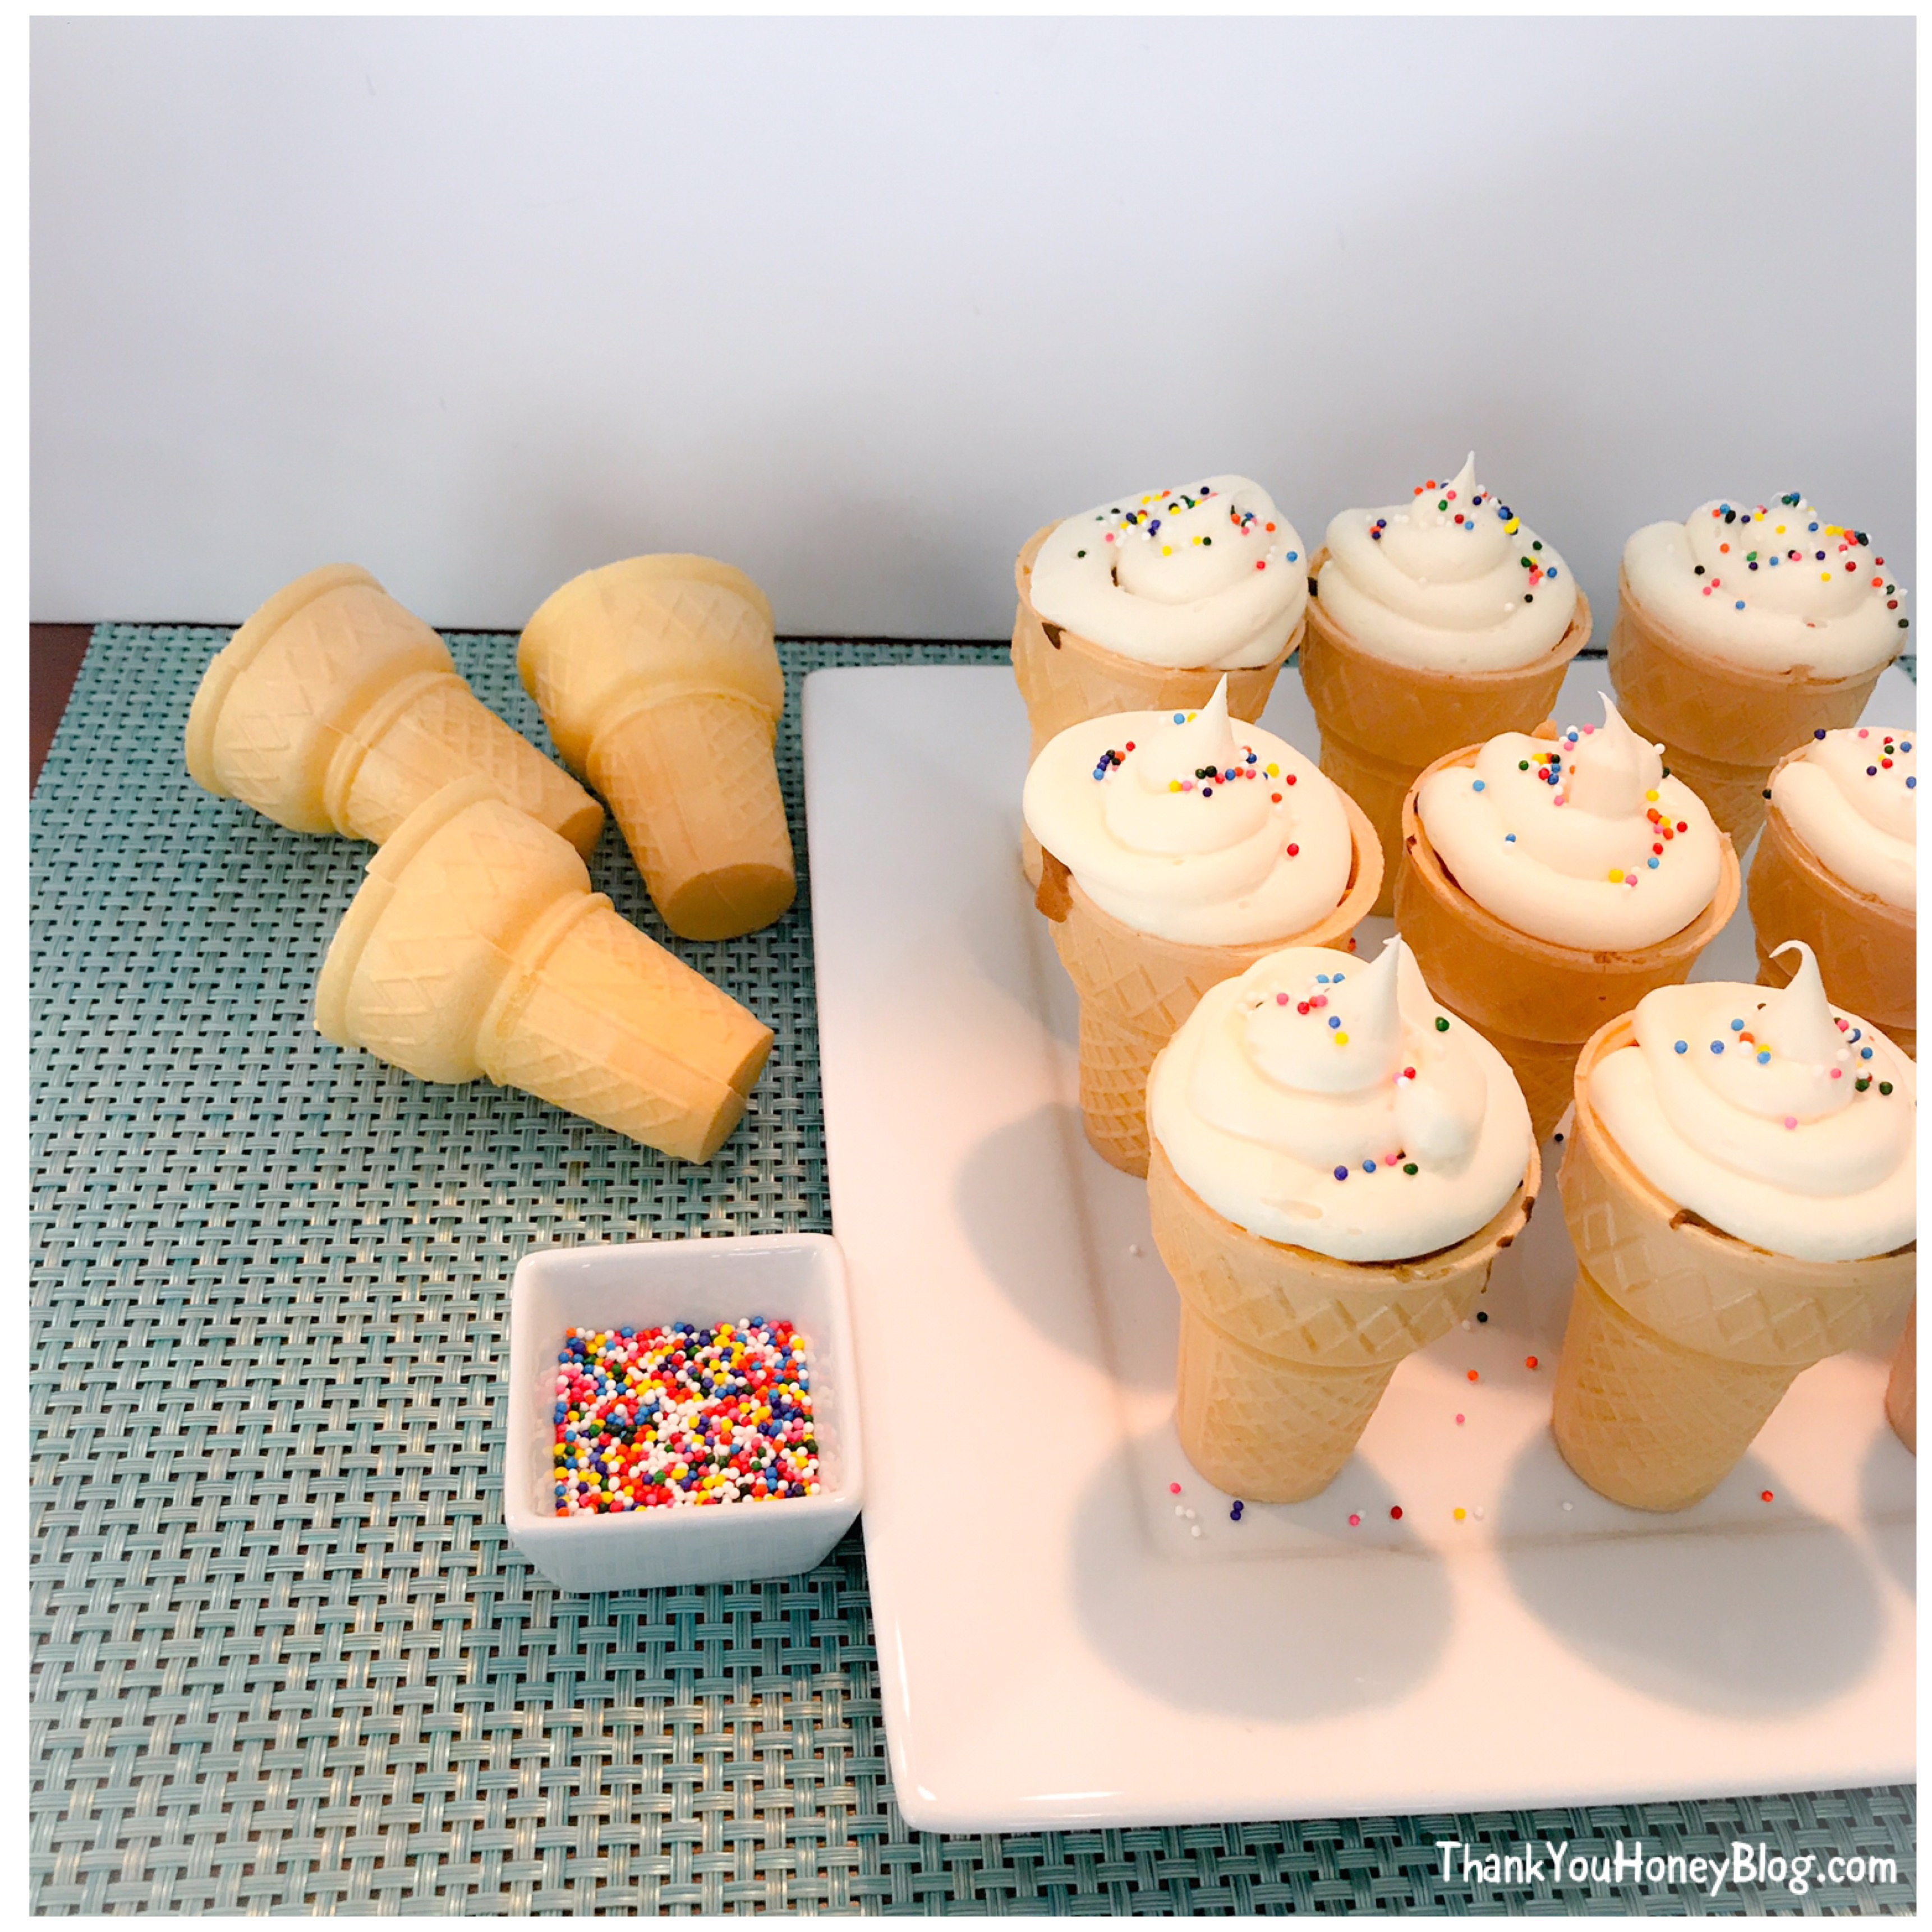 Cupcake Cones, Recipe, Dessert, Simple Recipe, Cupcake Cones, Treat, Summer, Cupcakes, Ice Cream Cones, ThankYouHoneyBlog.com, #TreatYourselfToSummer #ad